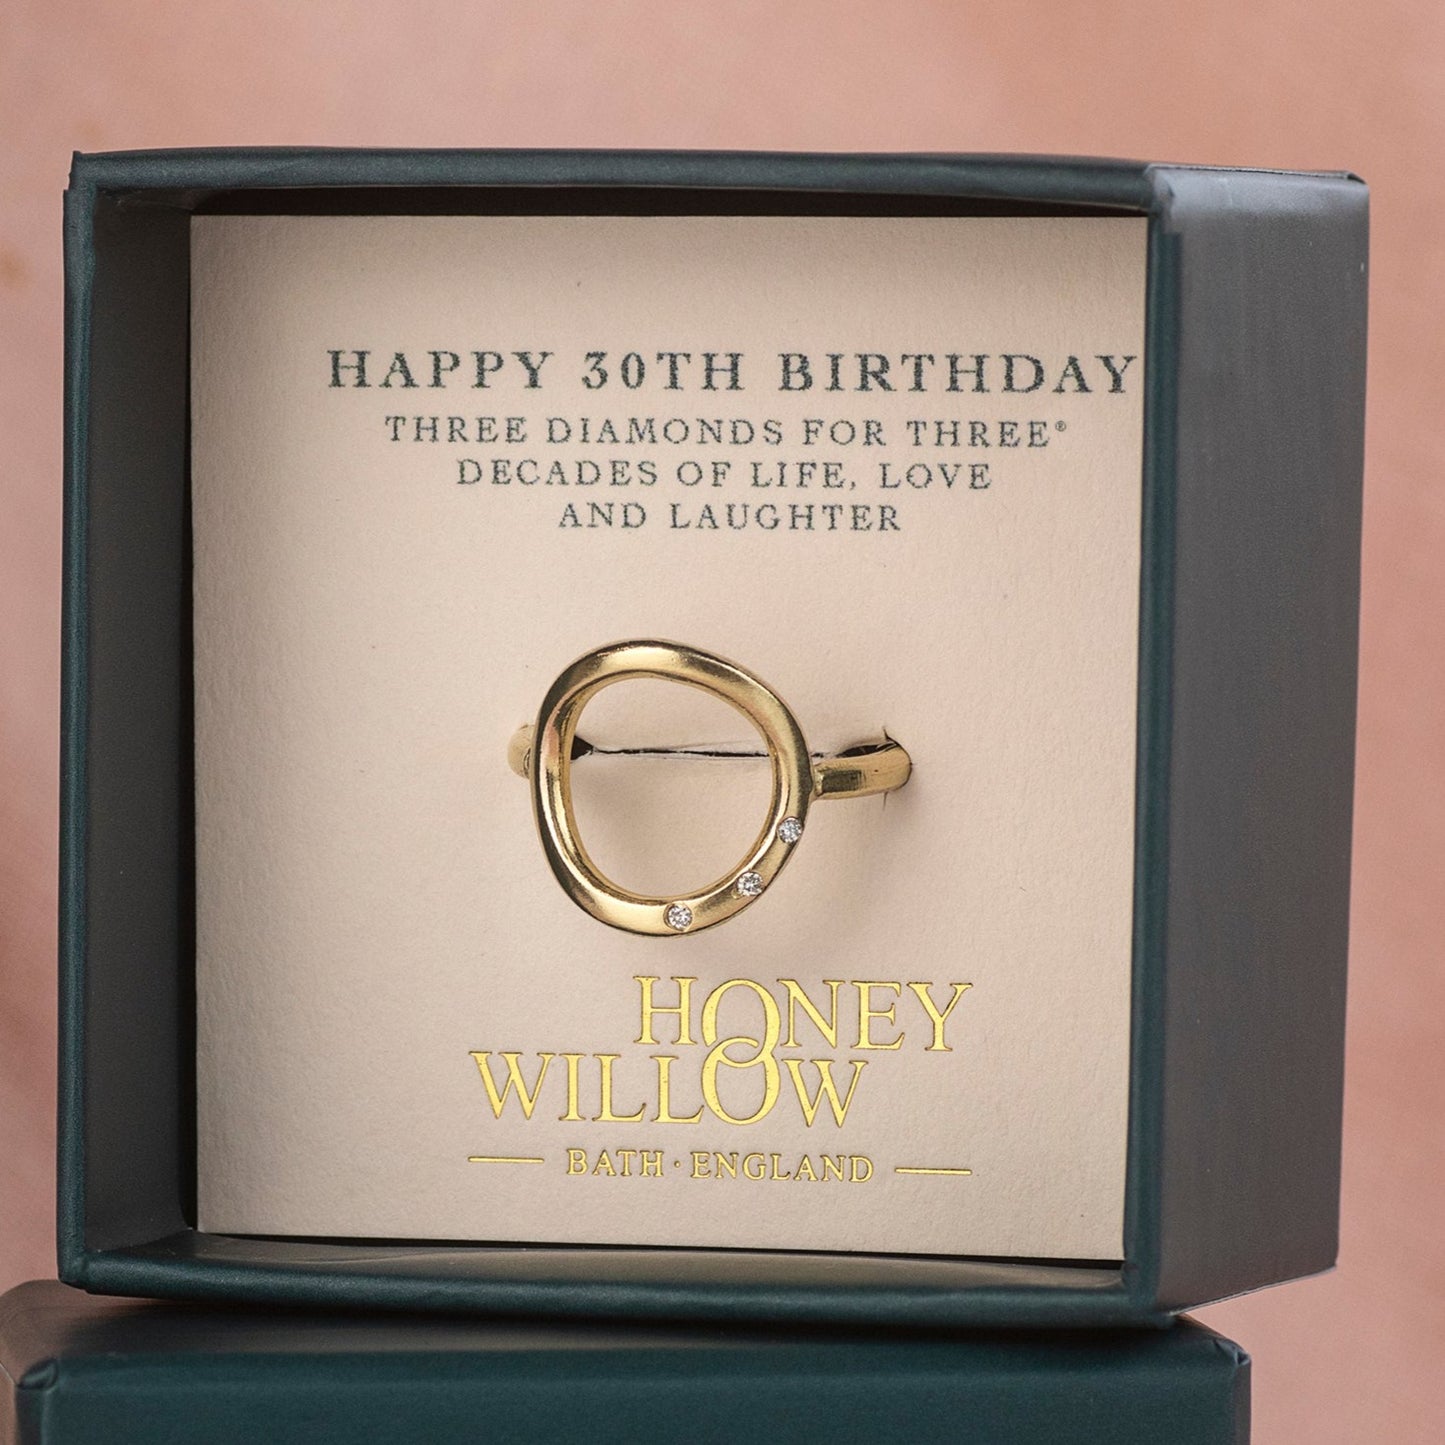 30th Birthday Ring - 9kt Gold Diamond Infinity Ring - 3 Diamonds for 3 Decades